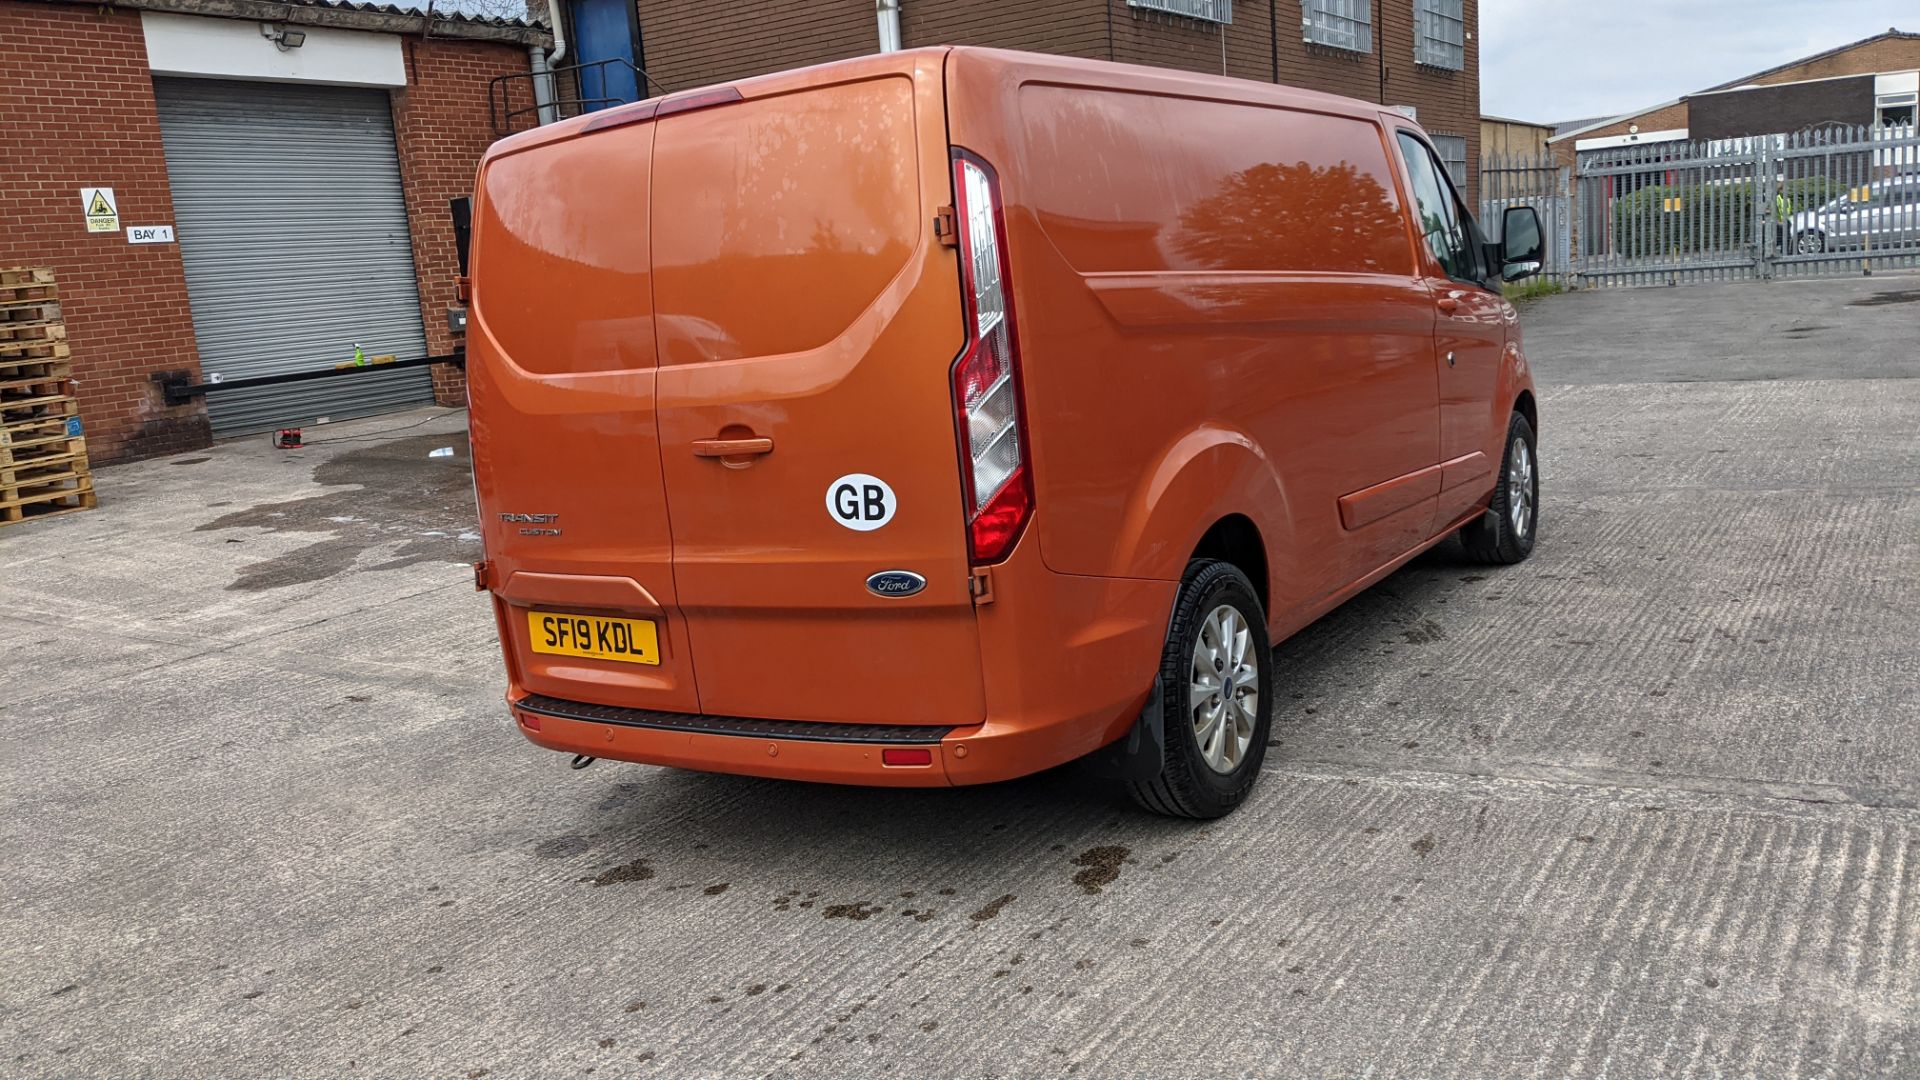 2019 Ford Transit Custom 300 L2 van, Orange Glow. High spec: Heated seats, air con, parking sensors - Image 19 of 66